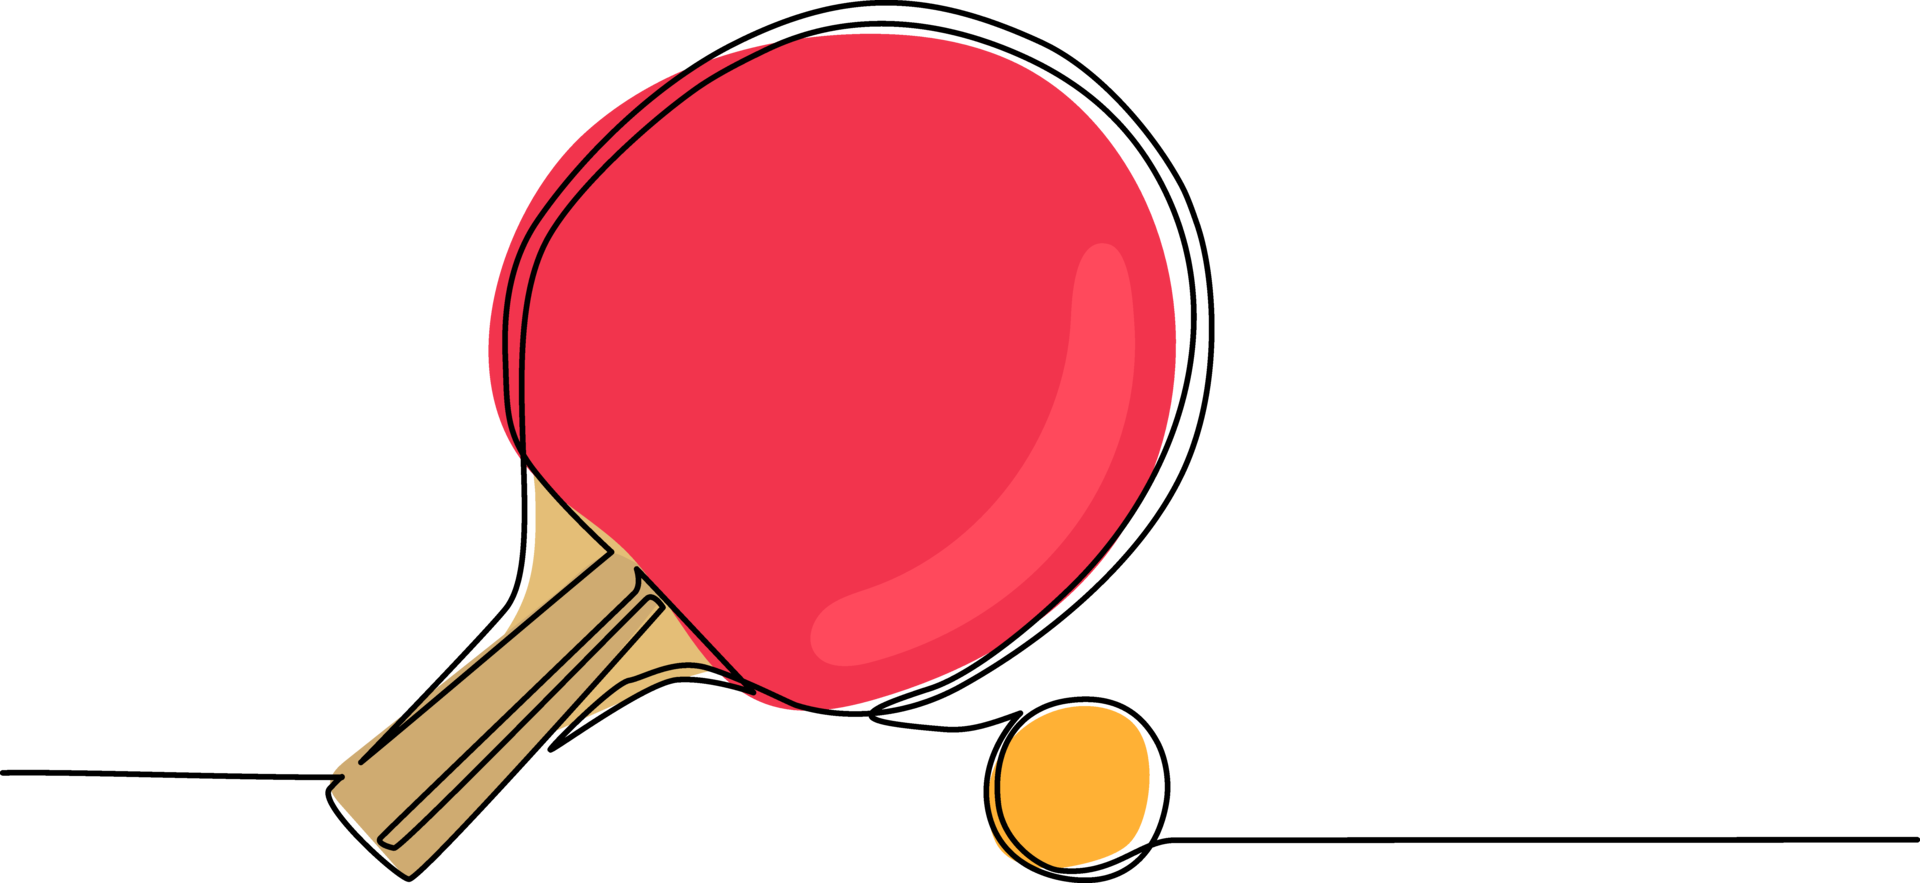 Table tennis bat cartoon #AD , #sponsored, #PAID, #tennis, #bat, #cartoon, # Table | Table tennis bats, Table tennis, Tennis gifts